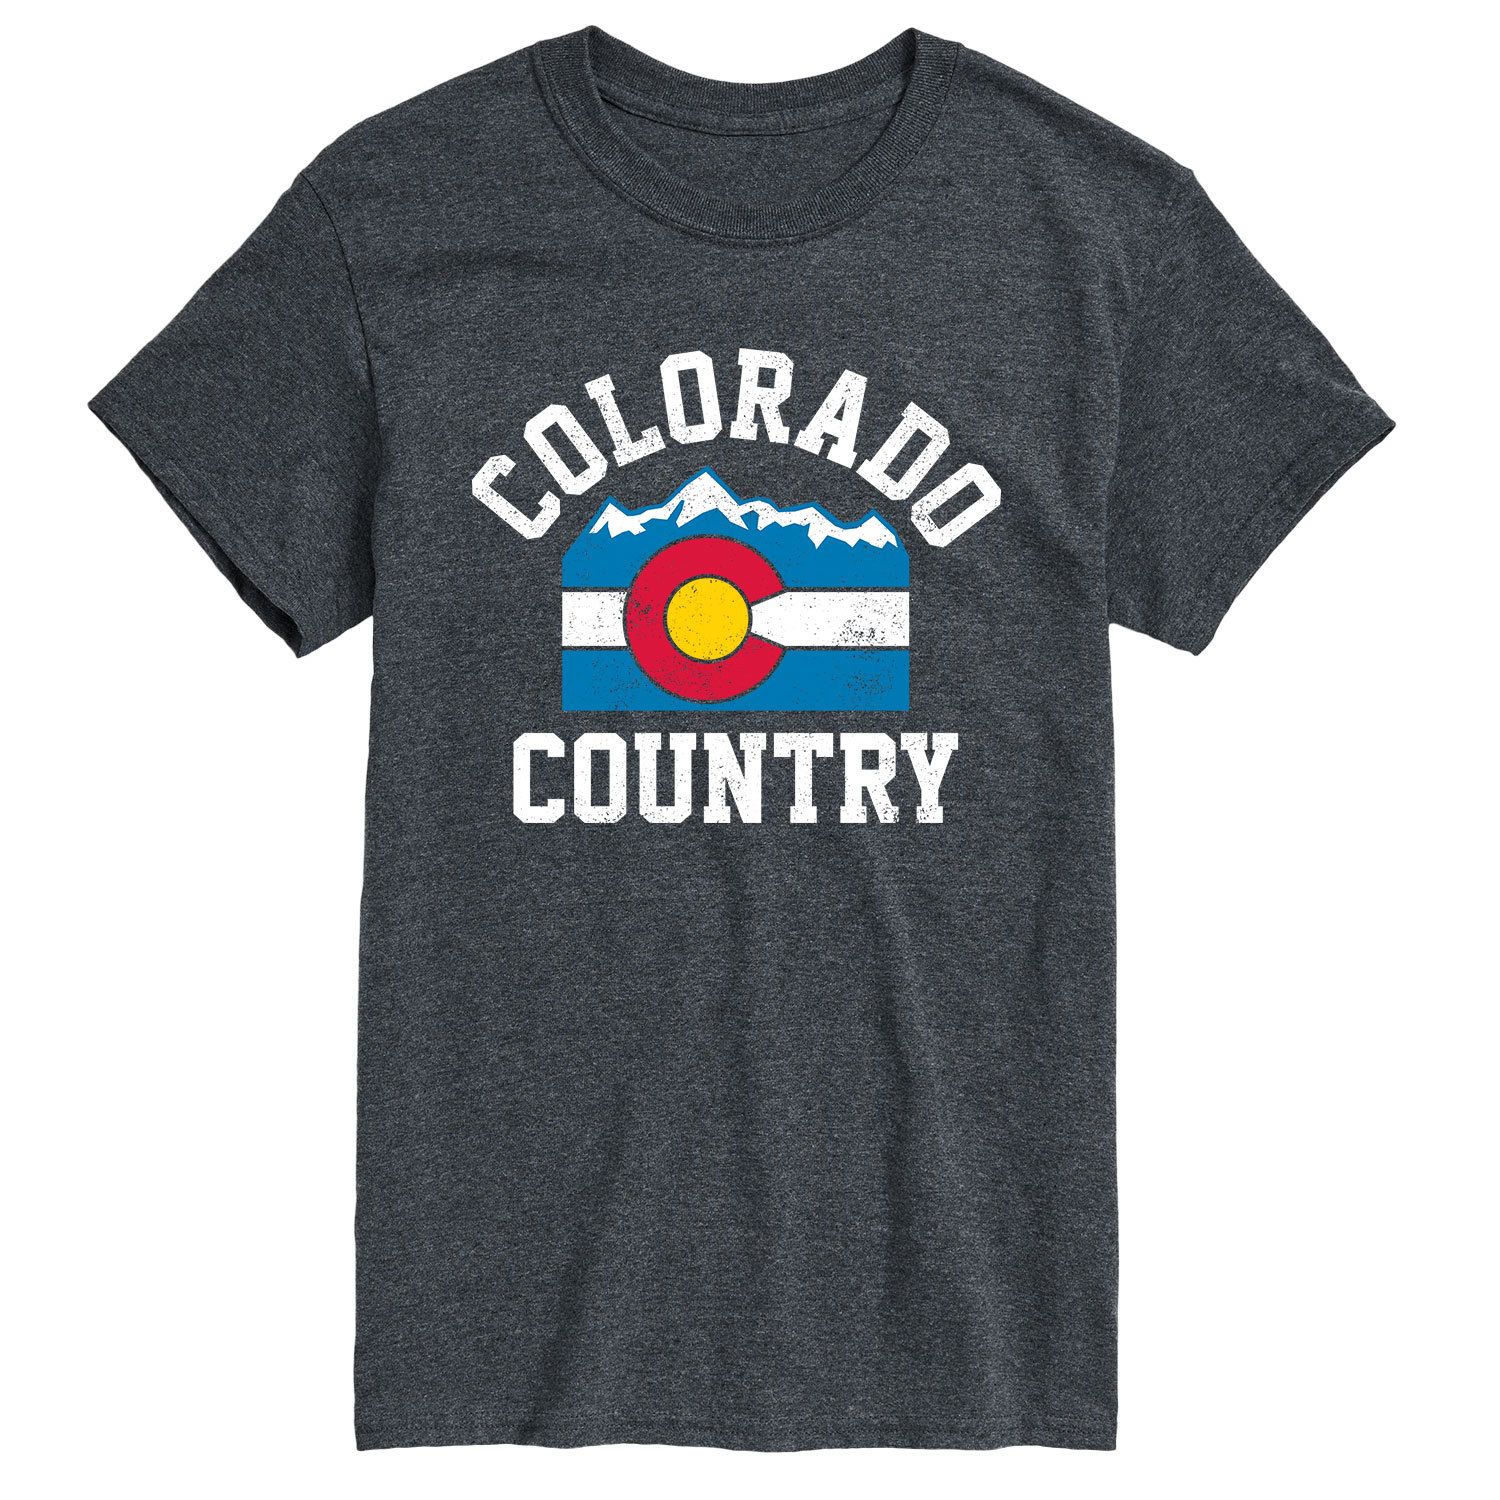 Мужская футболка Colorado Country Licensed Character